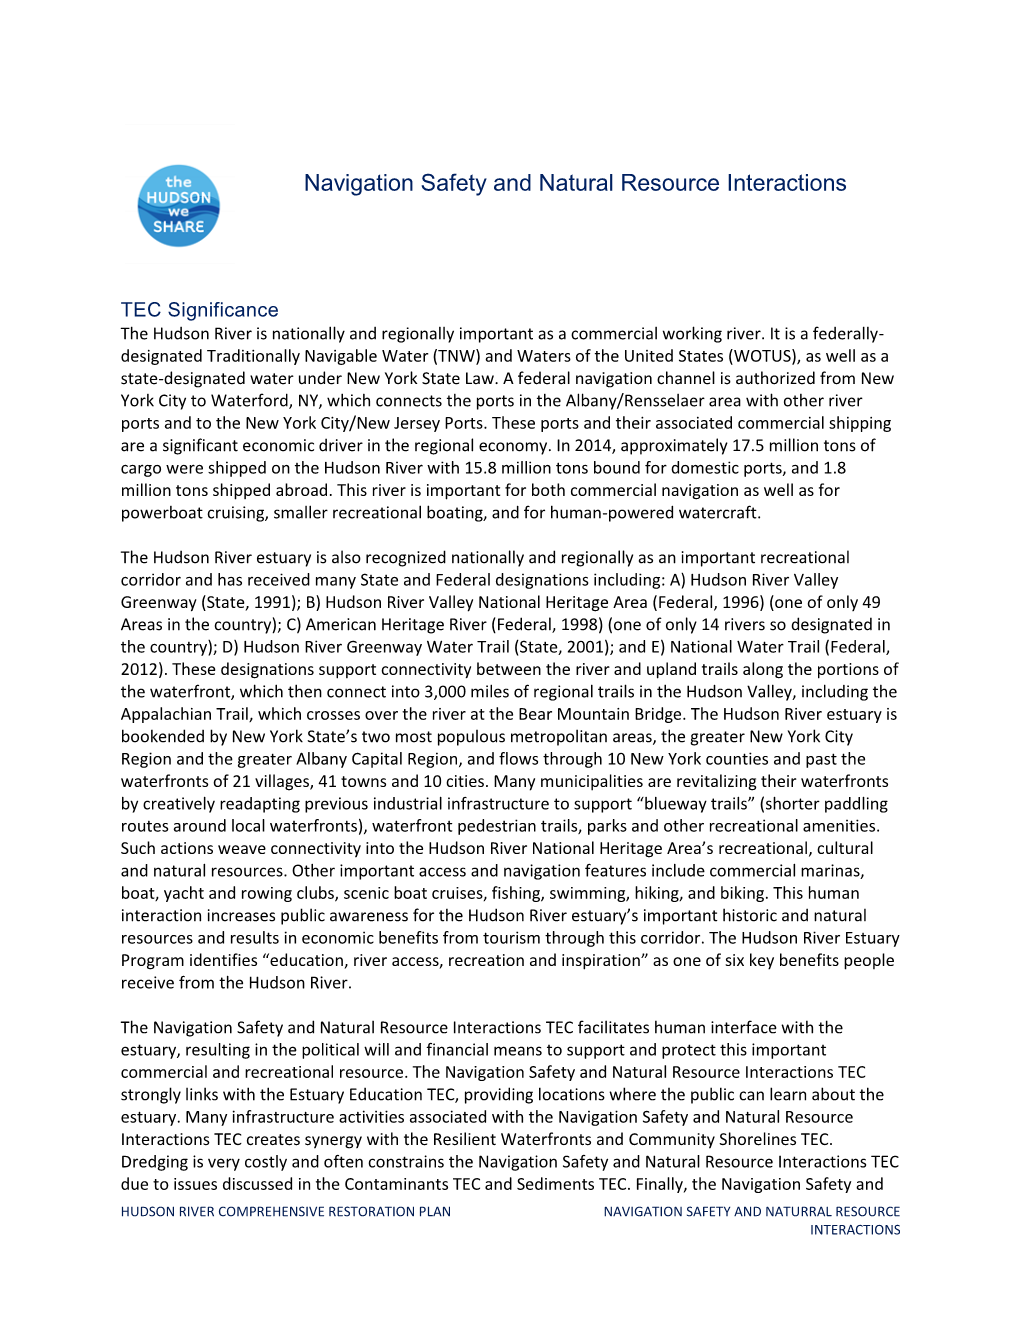 Hudson River Comprehensive Restoration Plan Navigation Safety and Naturral Resource Interactions